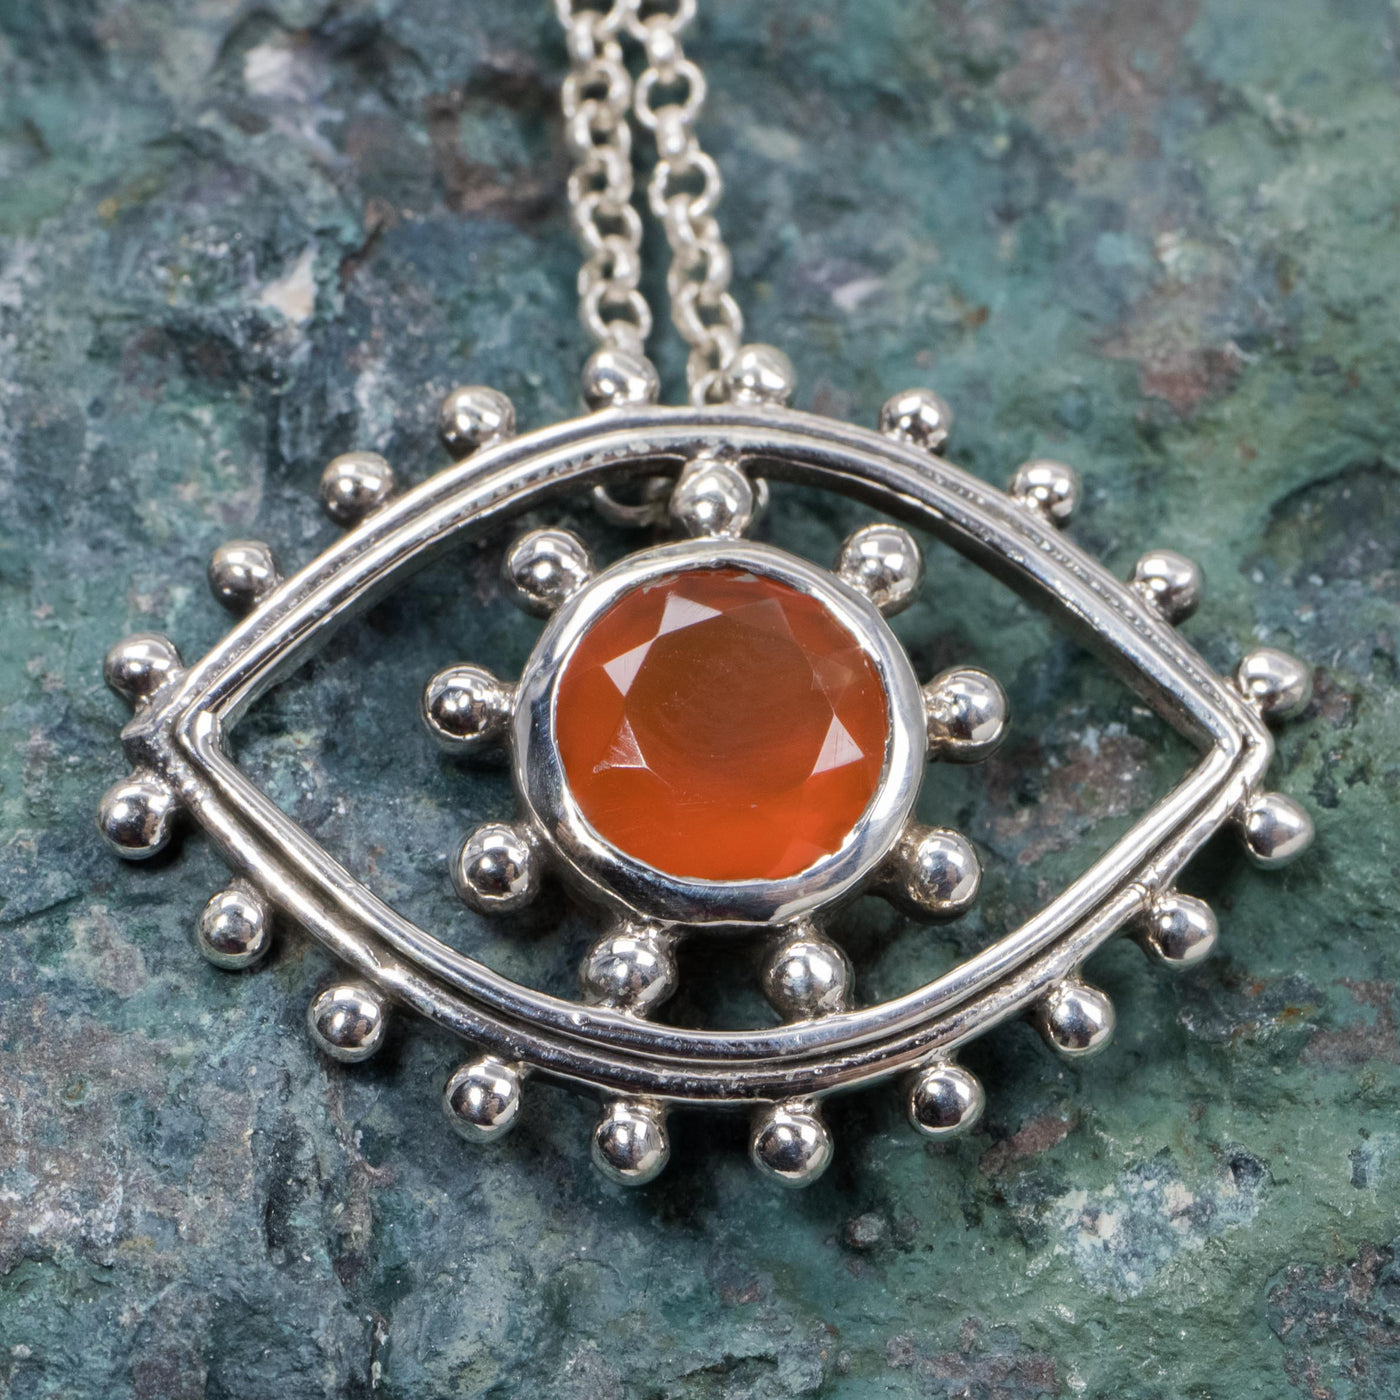 Carnelian Eye Pendant Necklace